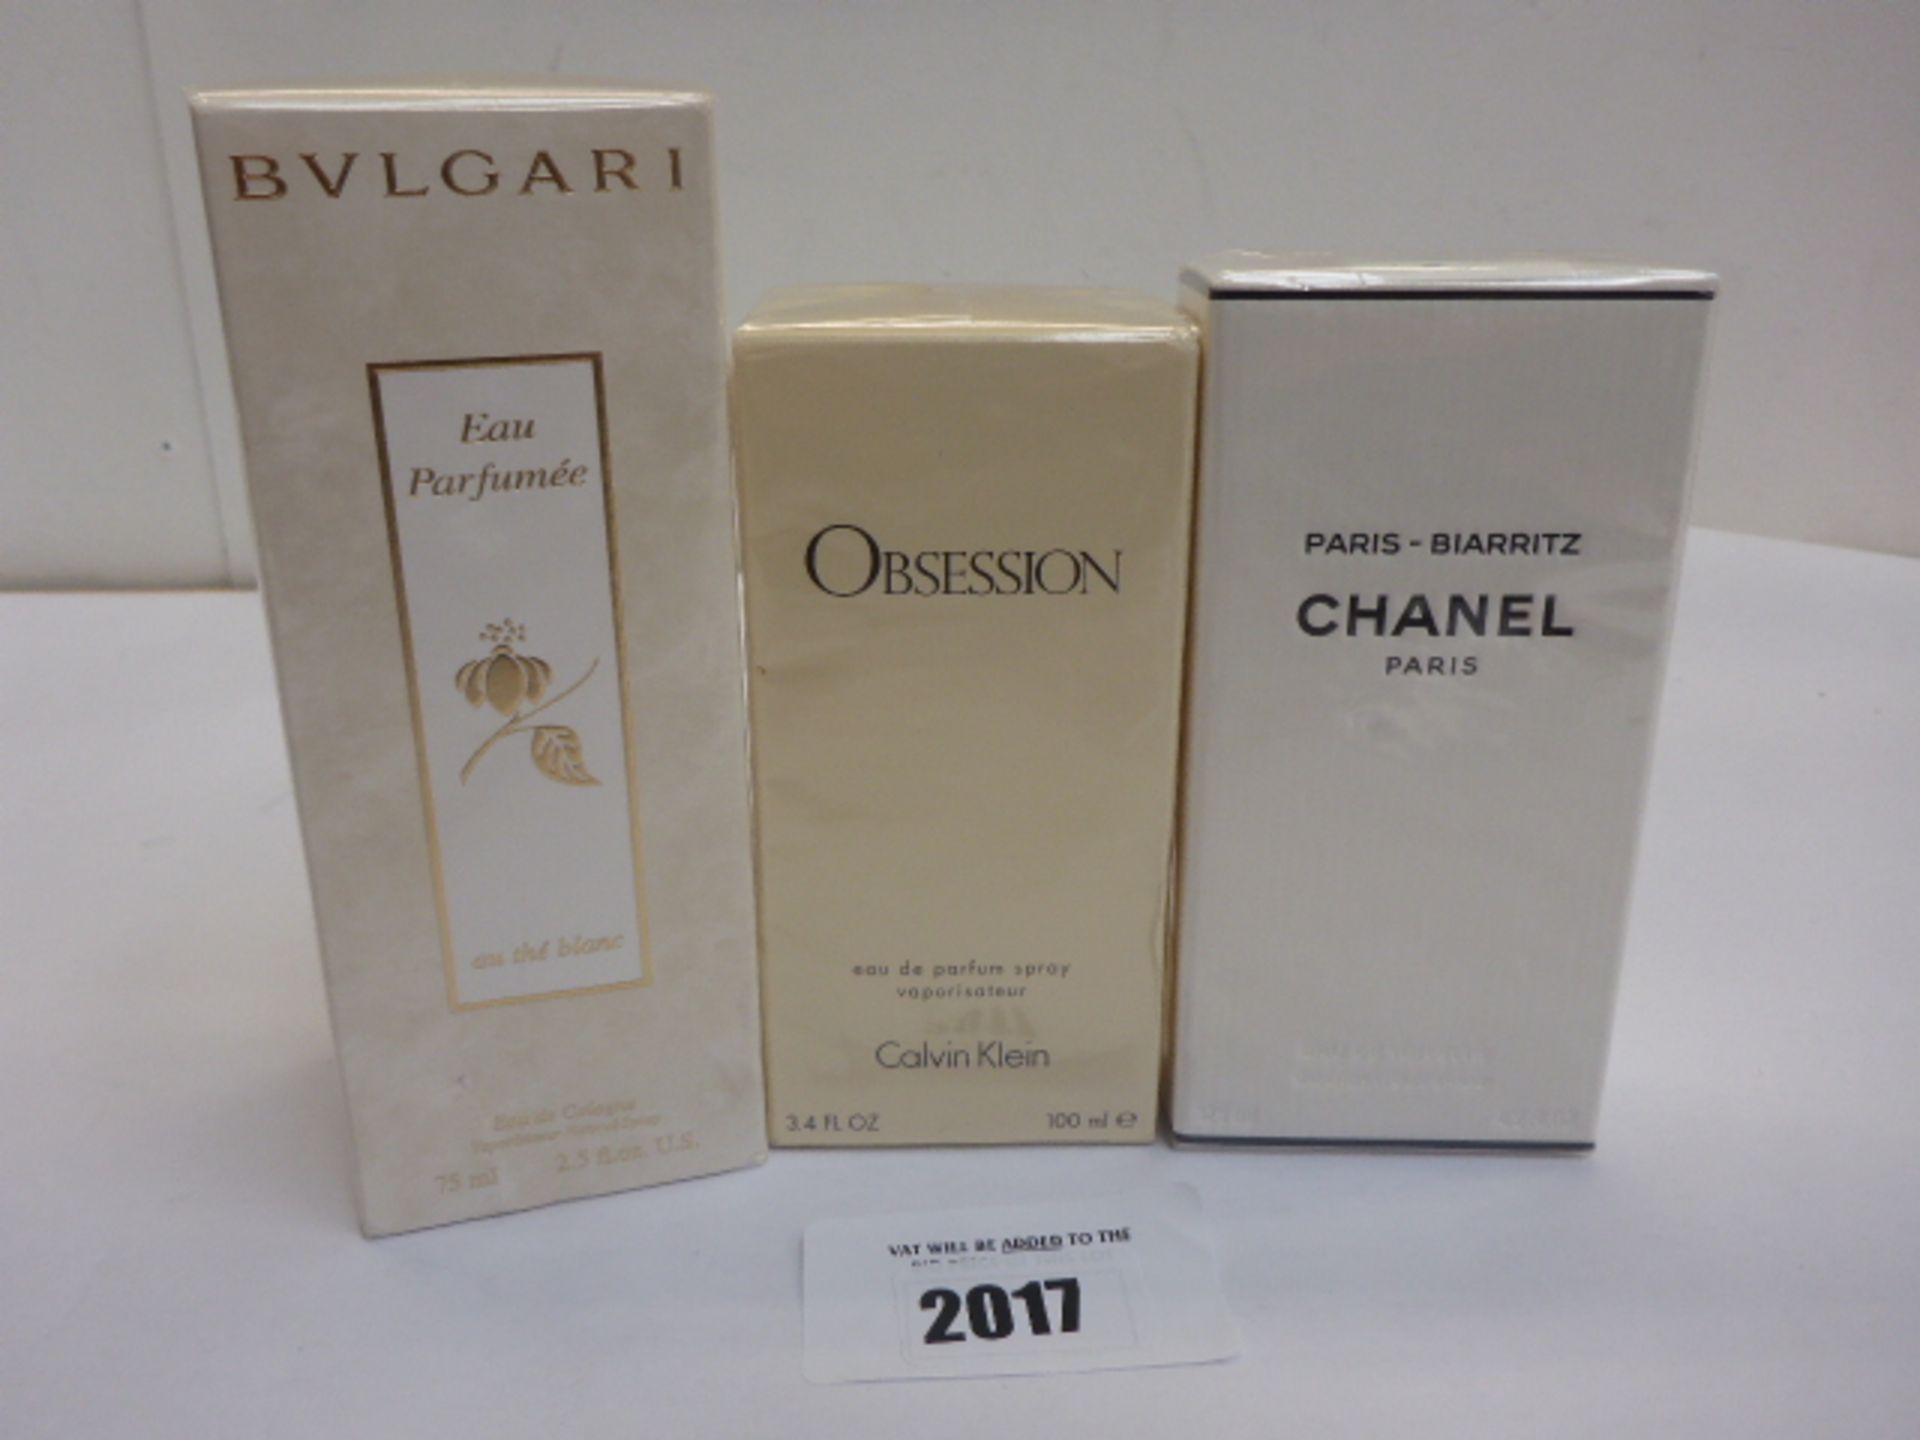 Chanel Paris-Biarritz, Calvin Klein Obsession and Bvlgari Au The Blanc perfumes